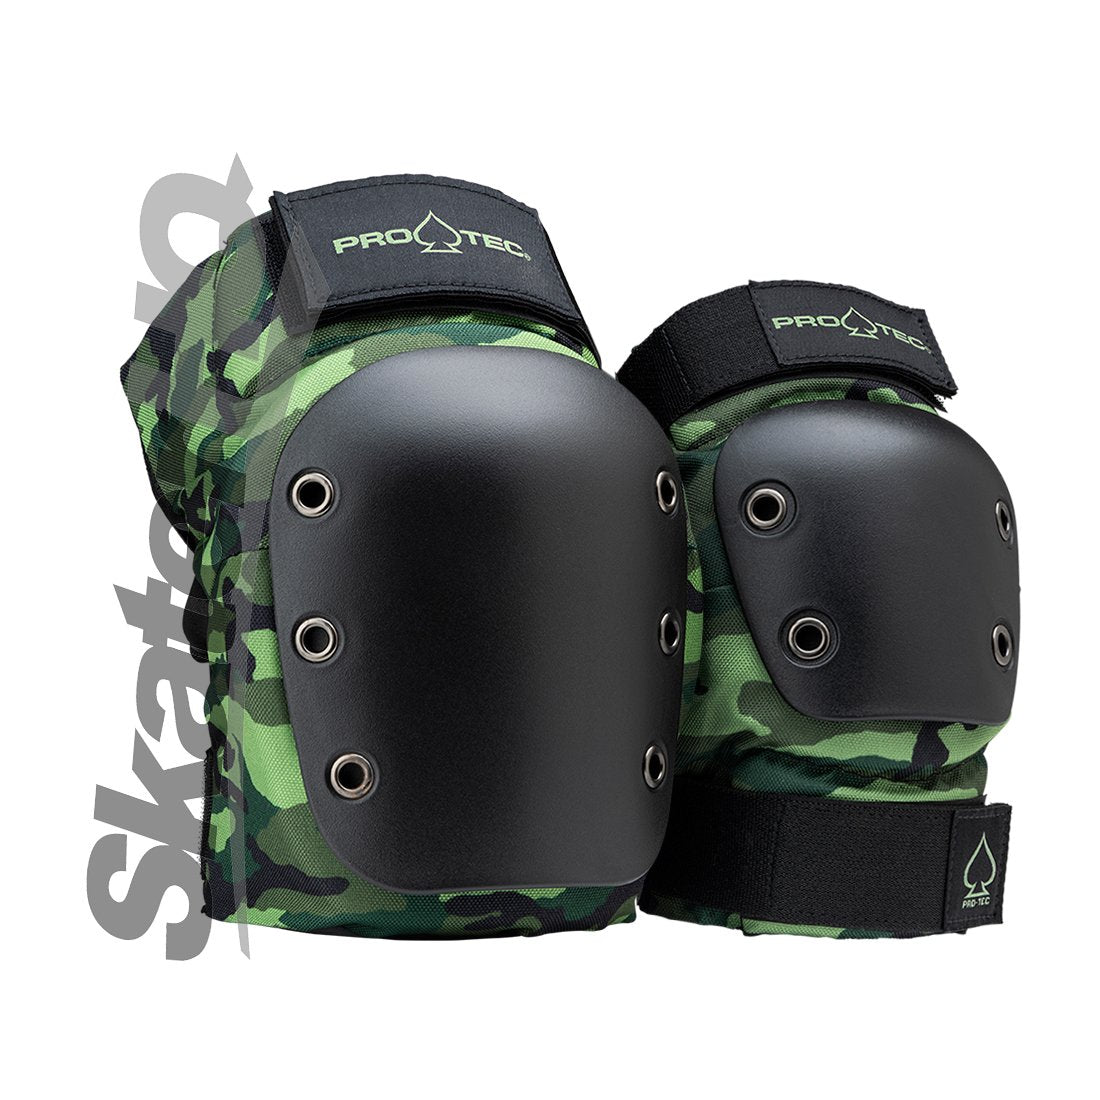 Pro-Tec Street Knee/Elbow Pad Set - Camo Protective Gear